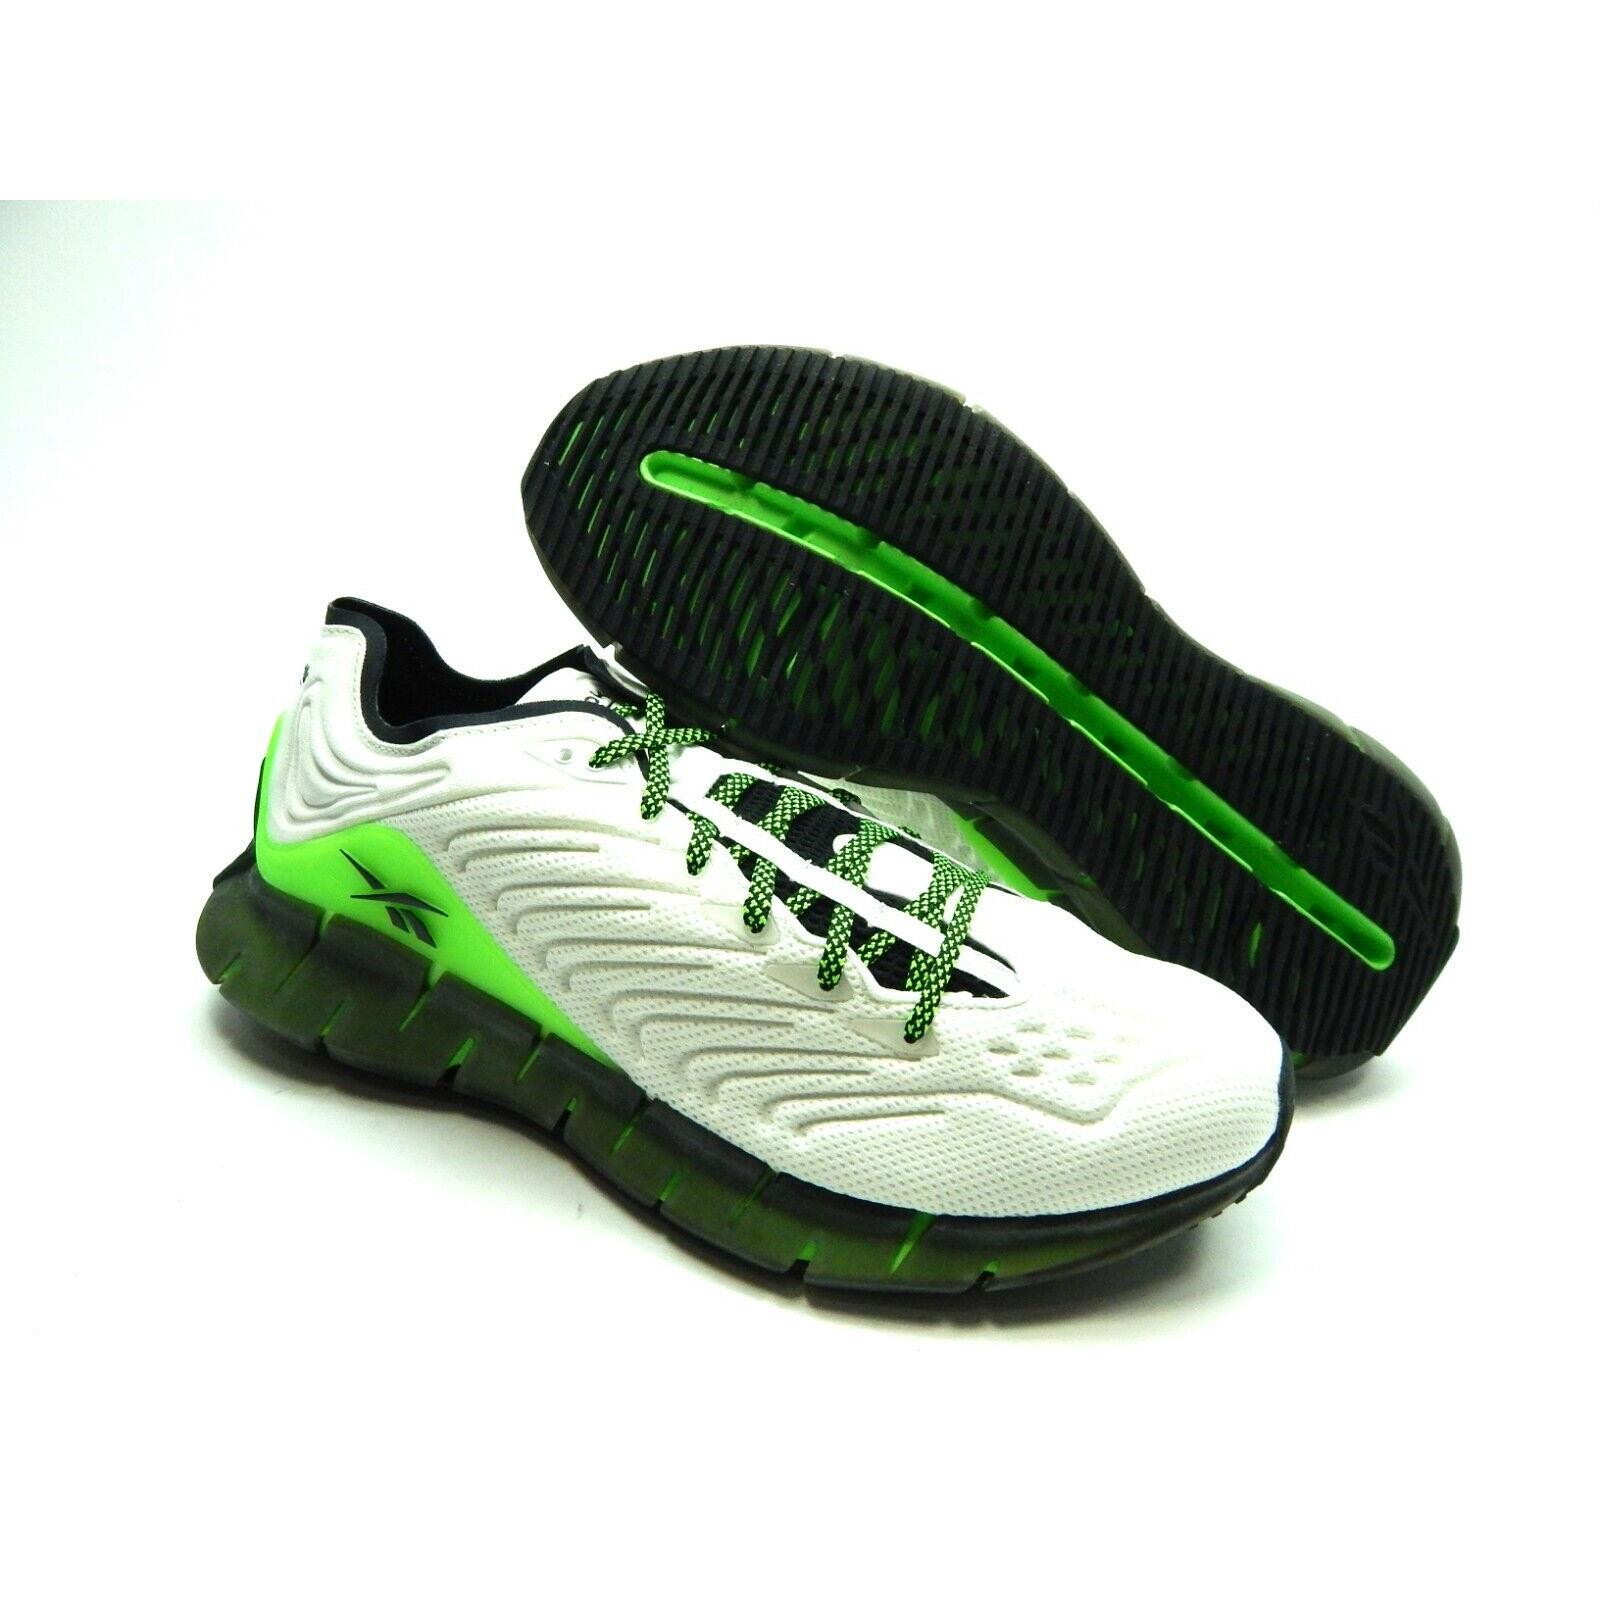 Reebok Zig Kinetica FZ3101 Running White Green Men Shoes Size 12